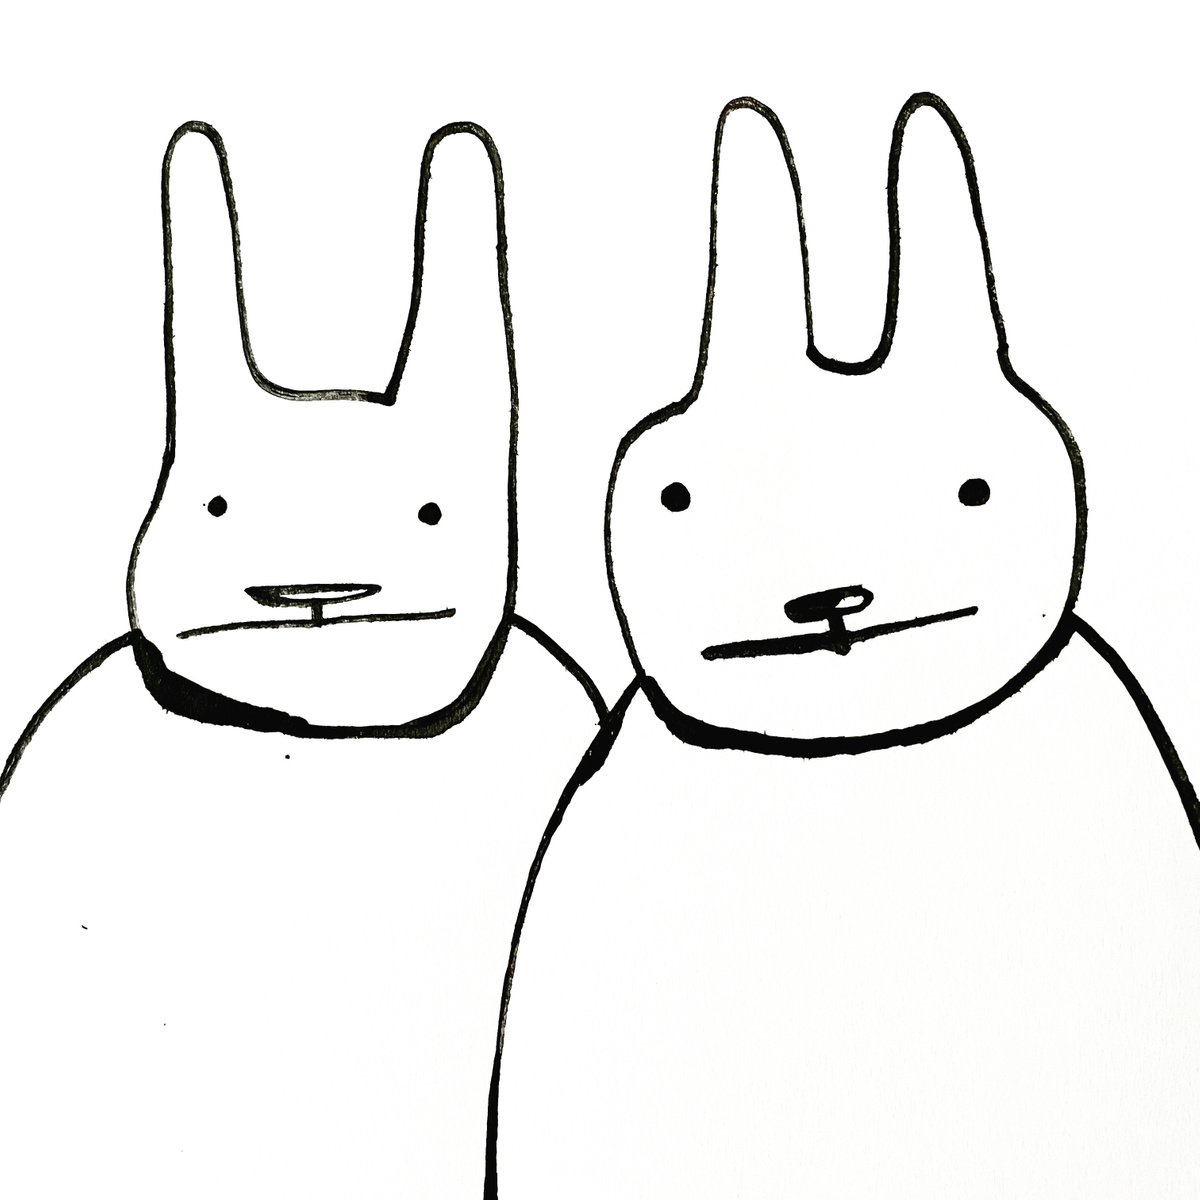 Two Rabbits by Nadim Basna